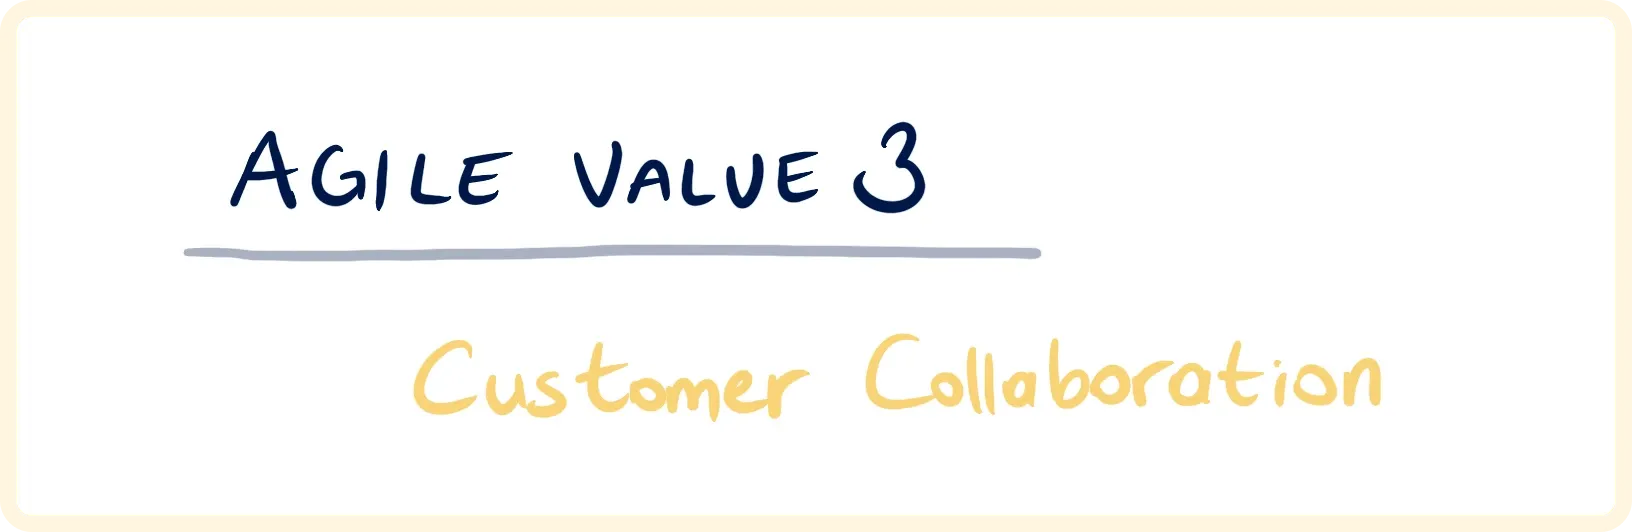 Agile Value 3 Customer Collaboration